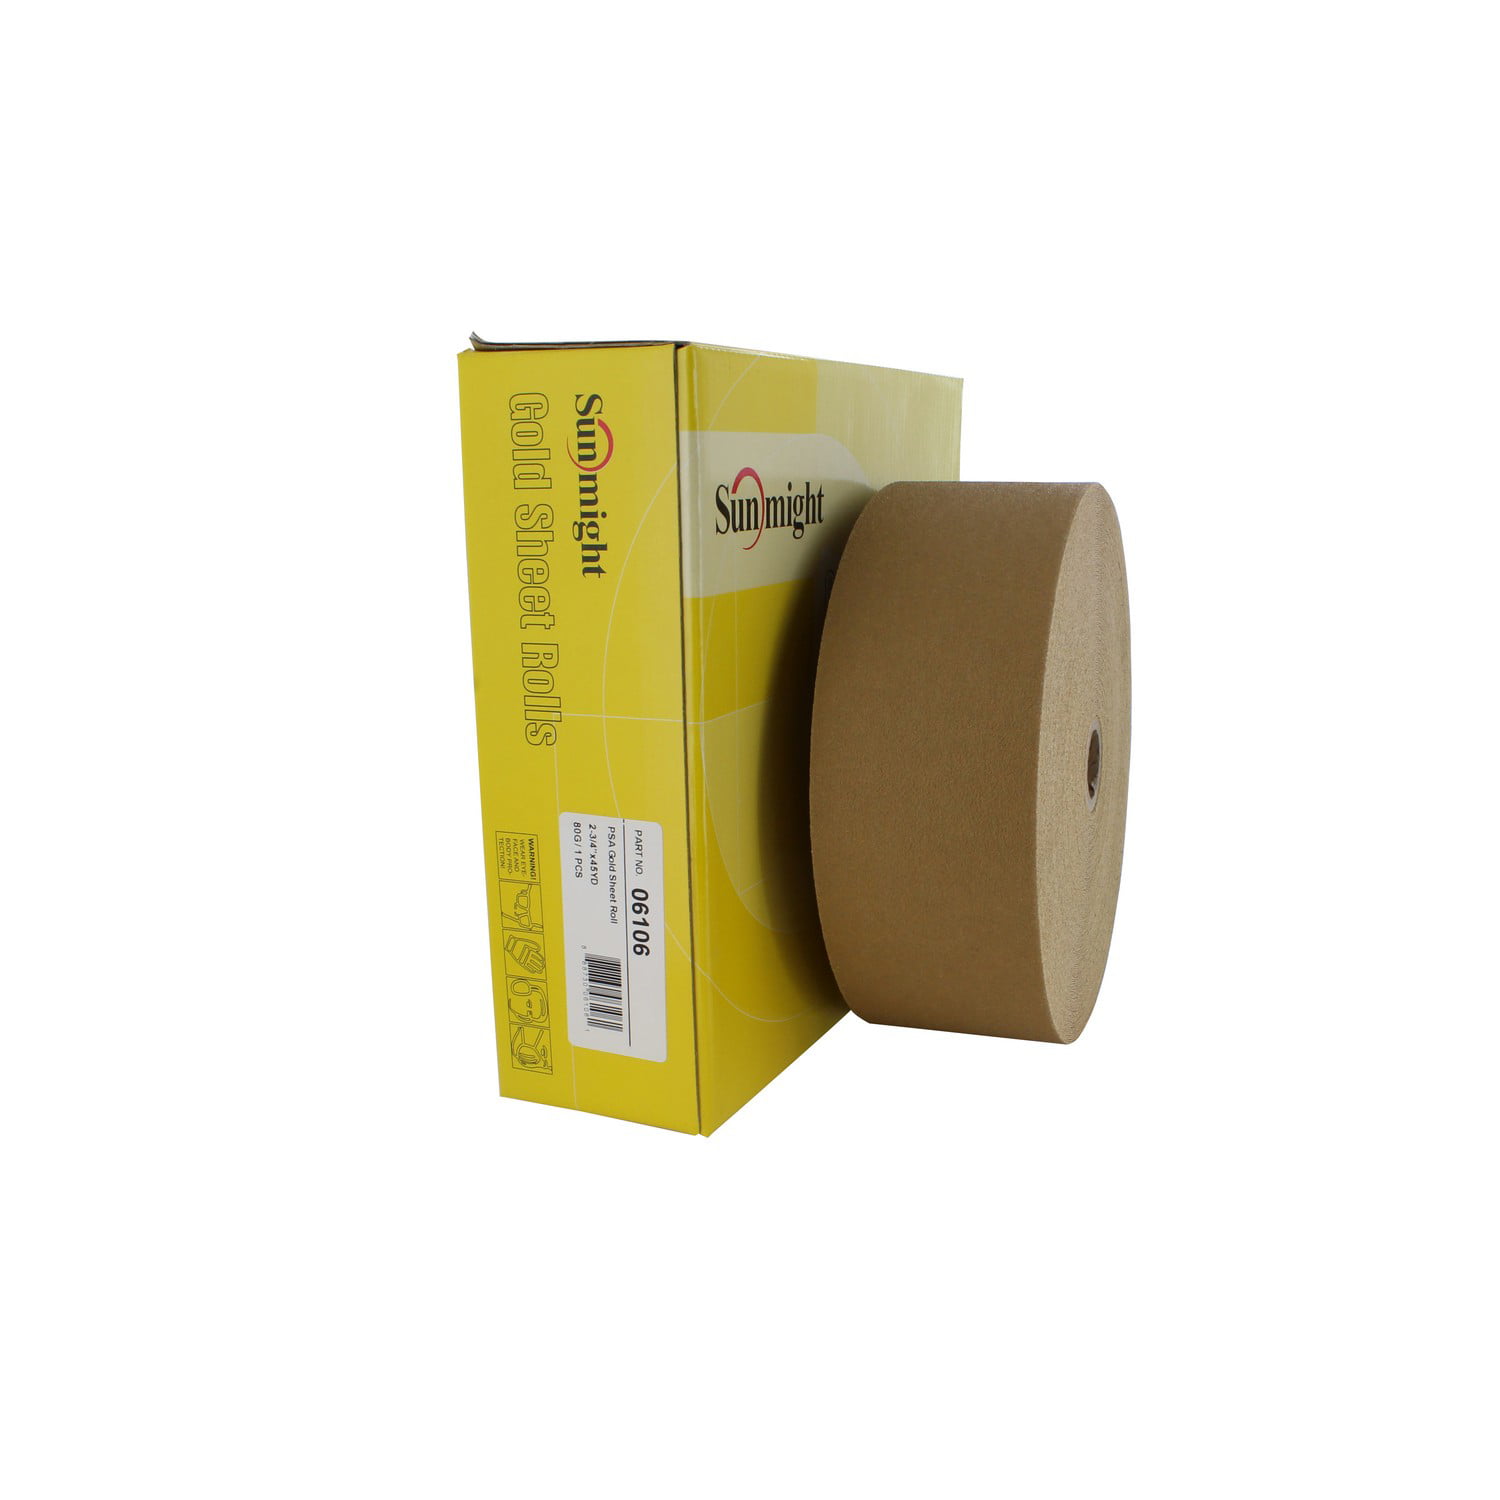 Sunmight 06106 Gold 2-3/4 x 45 yd Grit 80 PSA Sheet Roll 4 Pack 